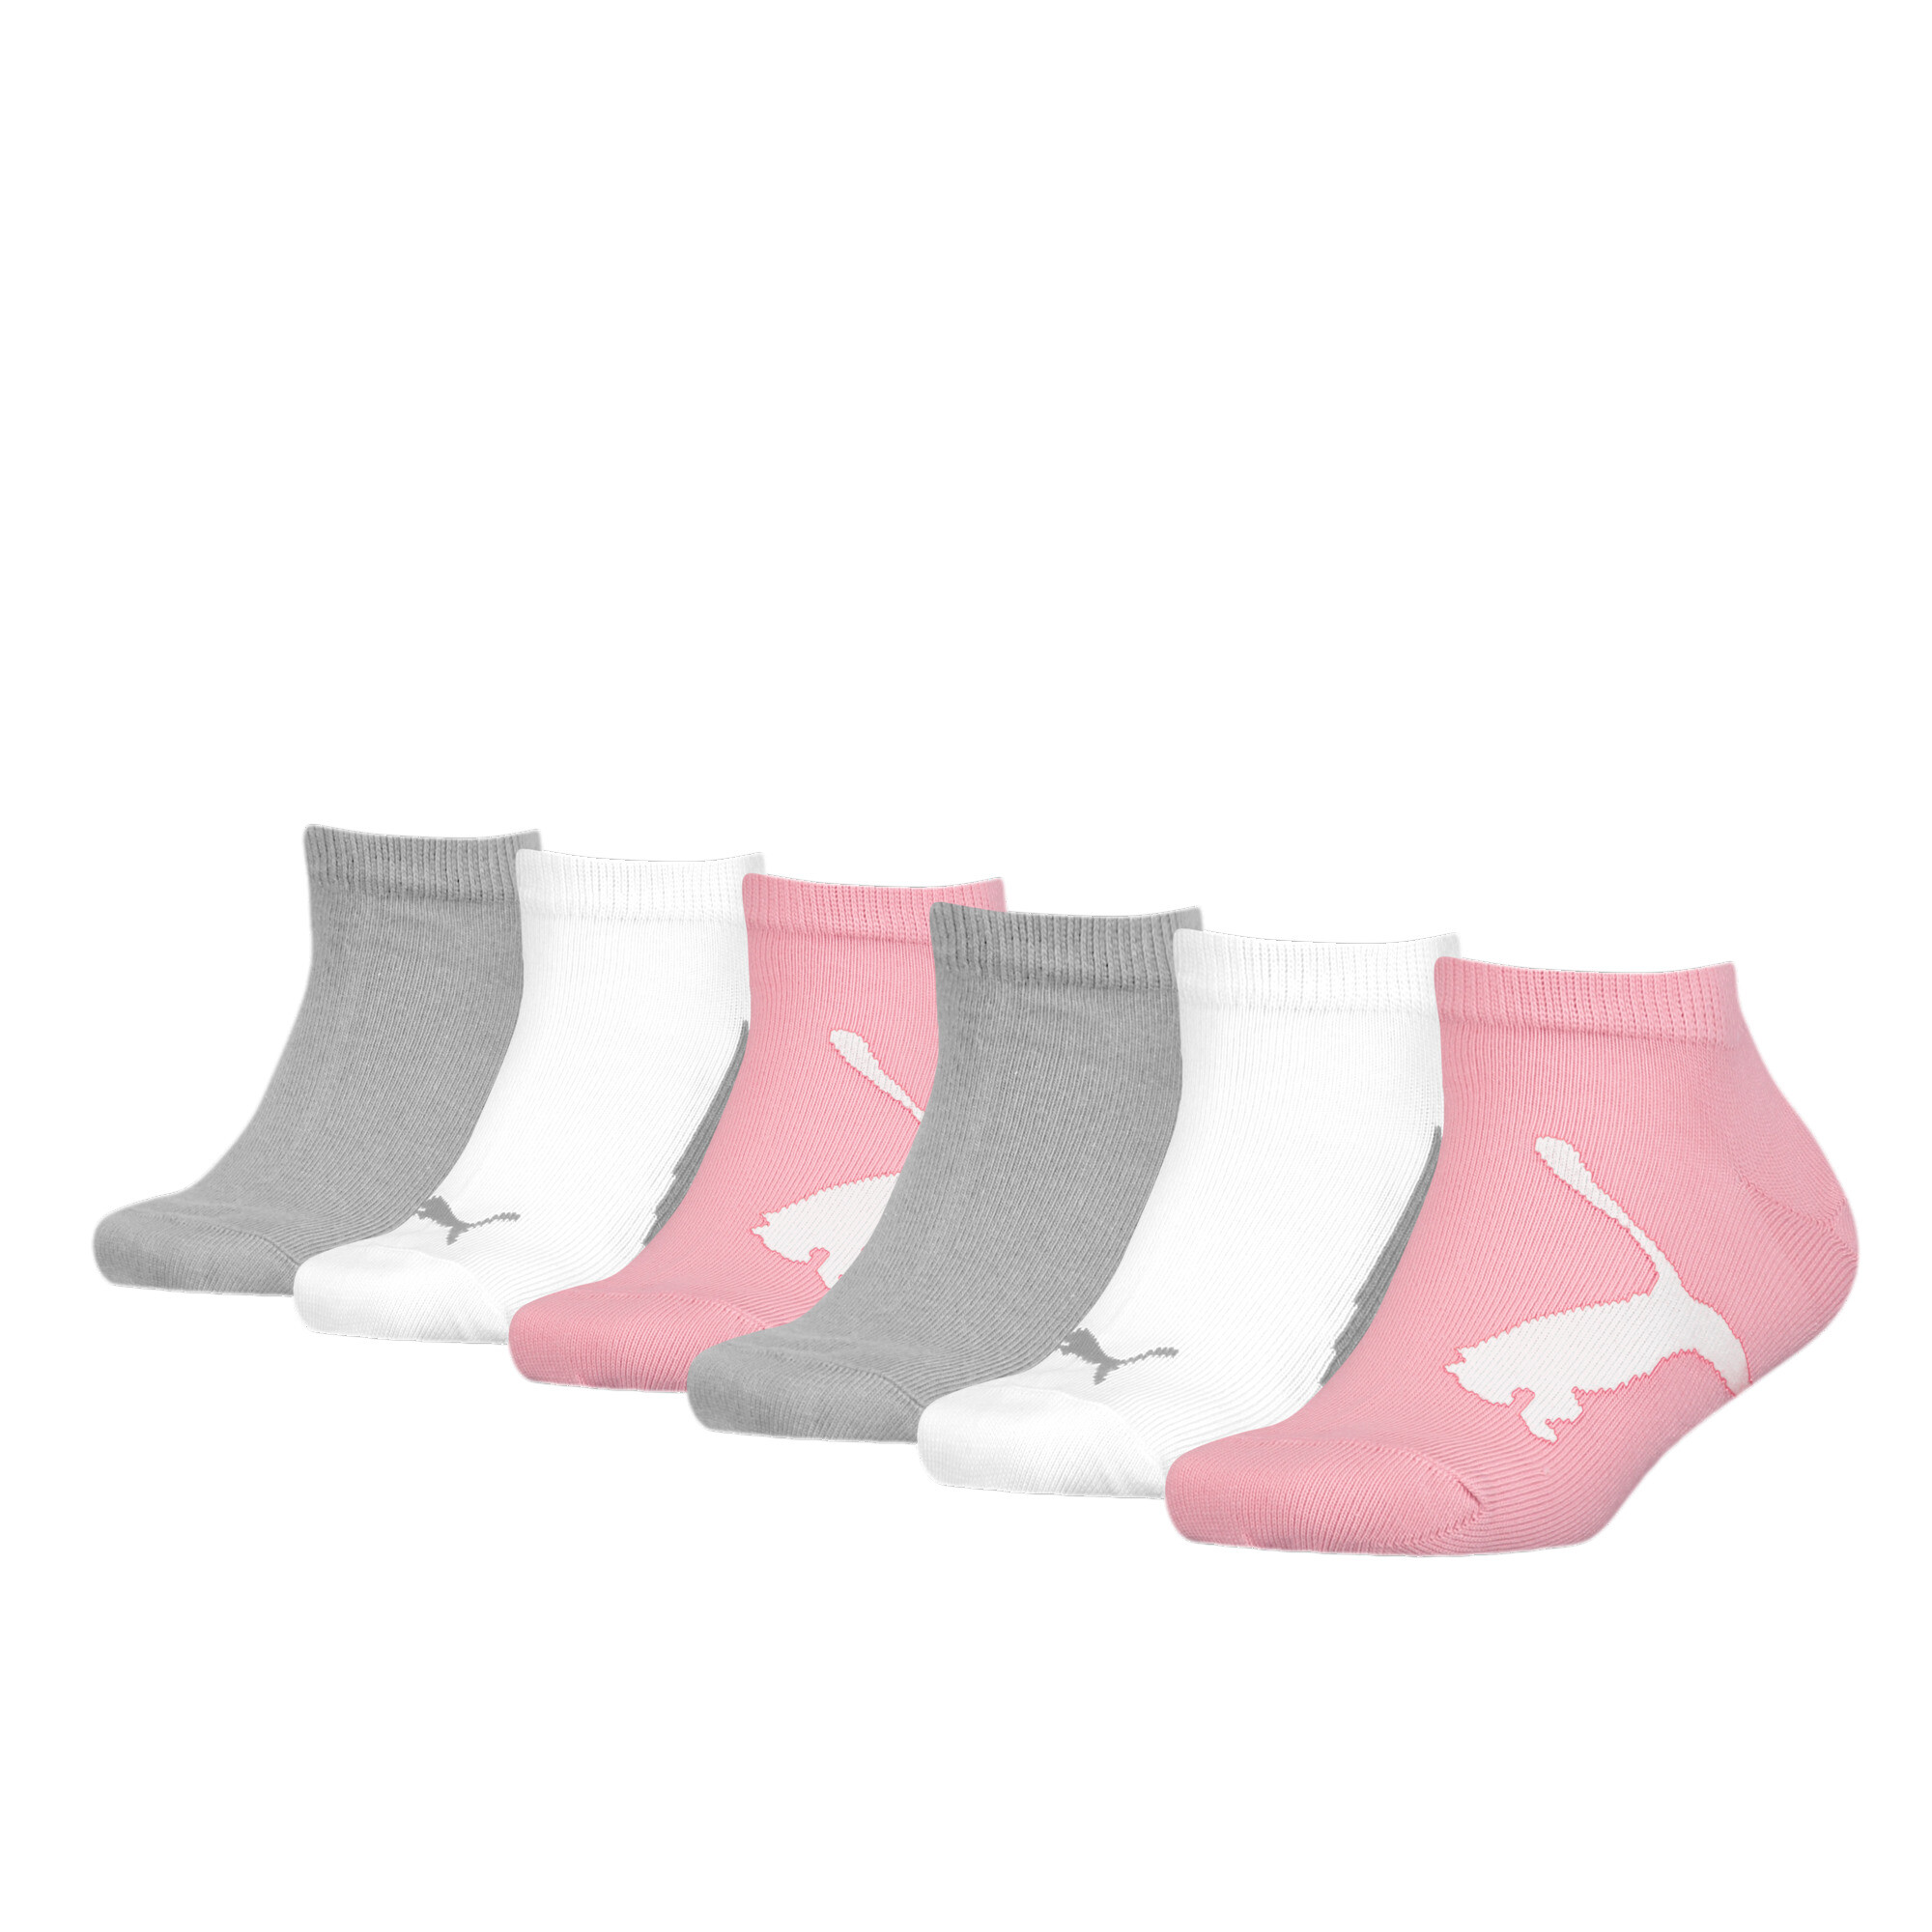 Puma Kids BWT Sneaker Socks 6 Pack, Pink, Size 23-26, Clothing